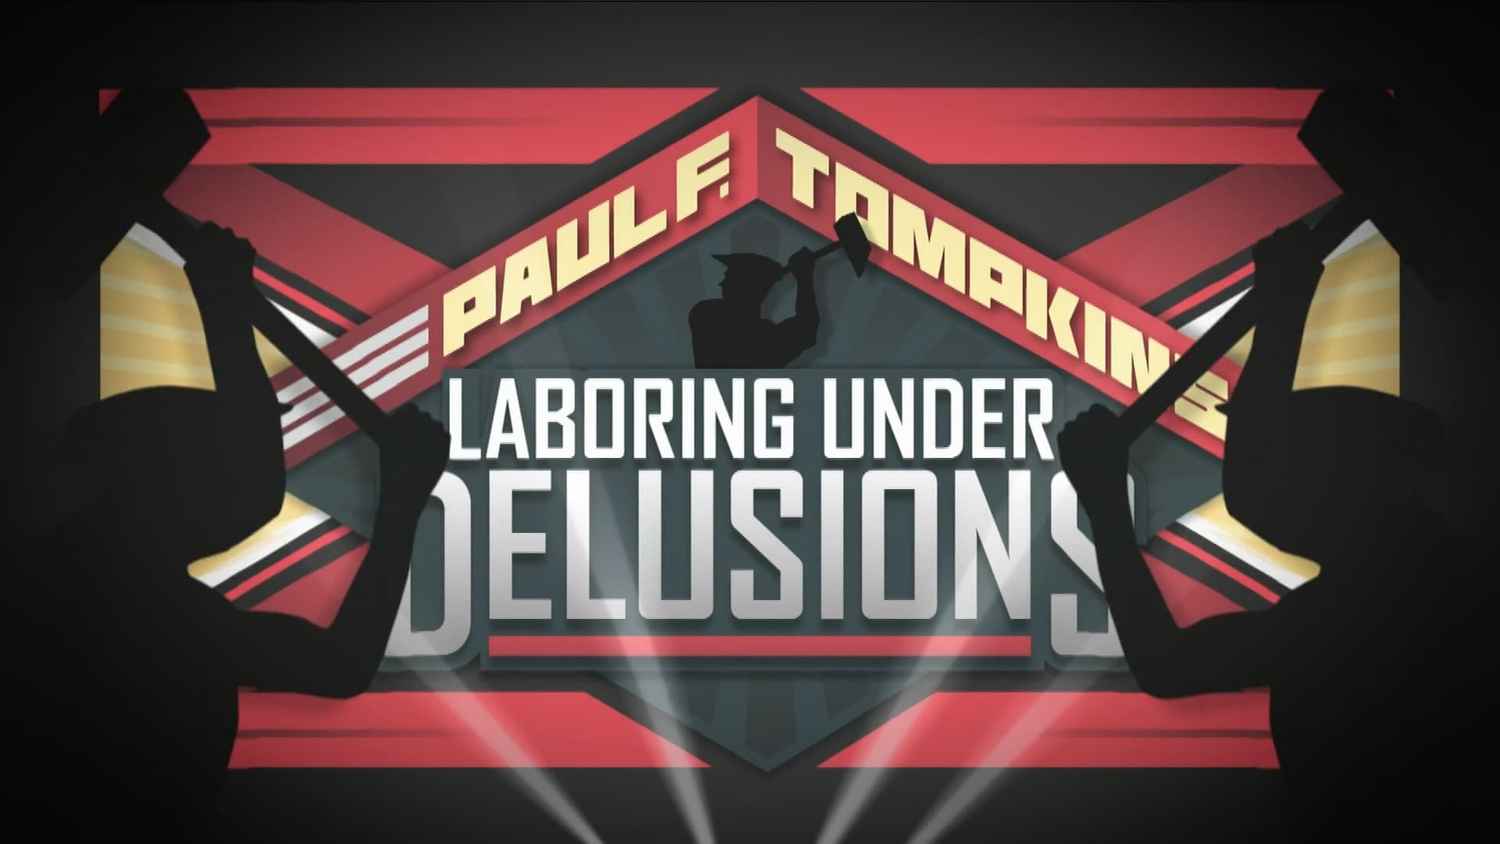 Paul F. Tompkins: Laboring Under Delusions